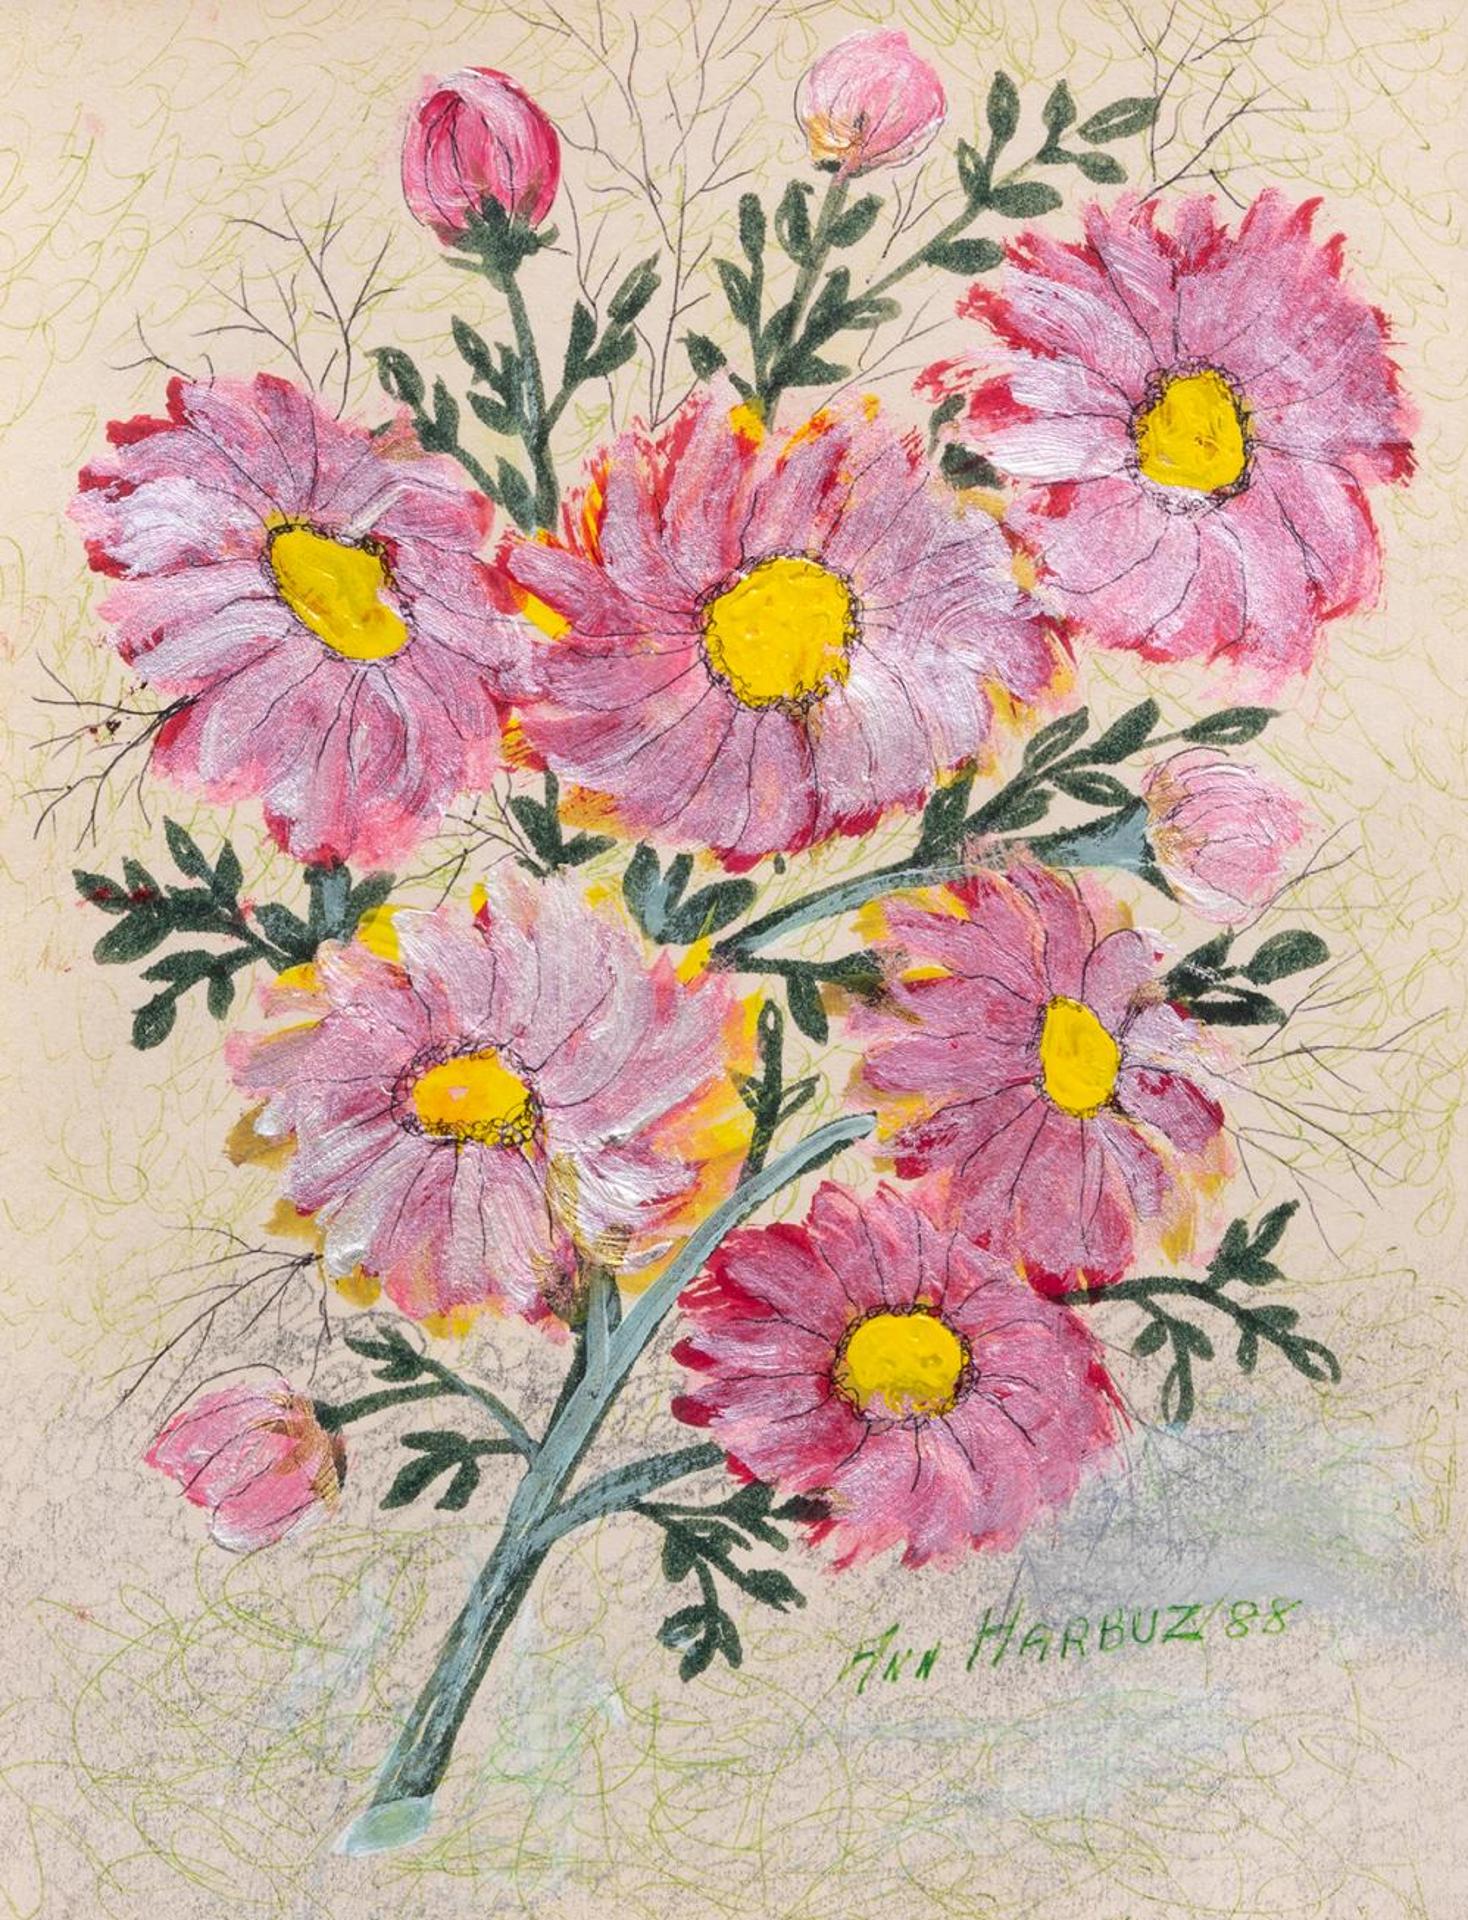 Ann Alexandra Harbuz (1908-1989) - Carnations